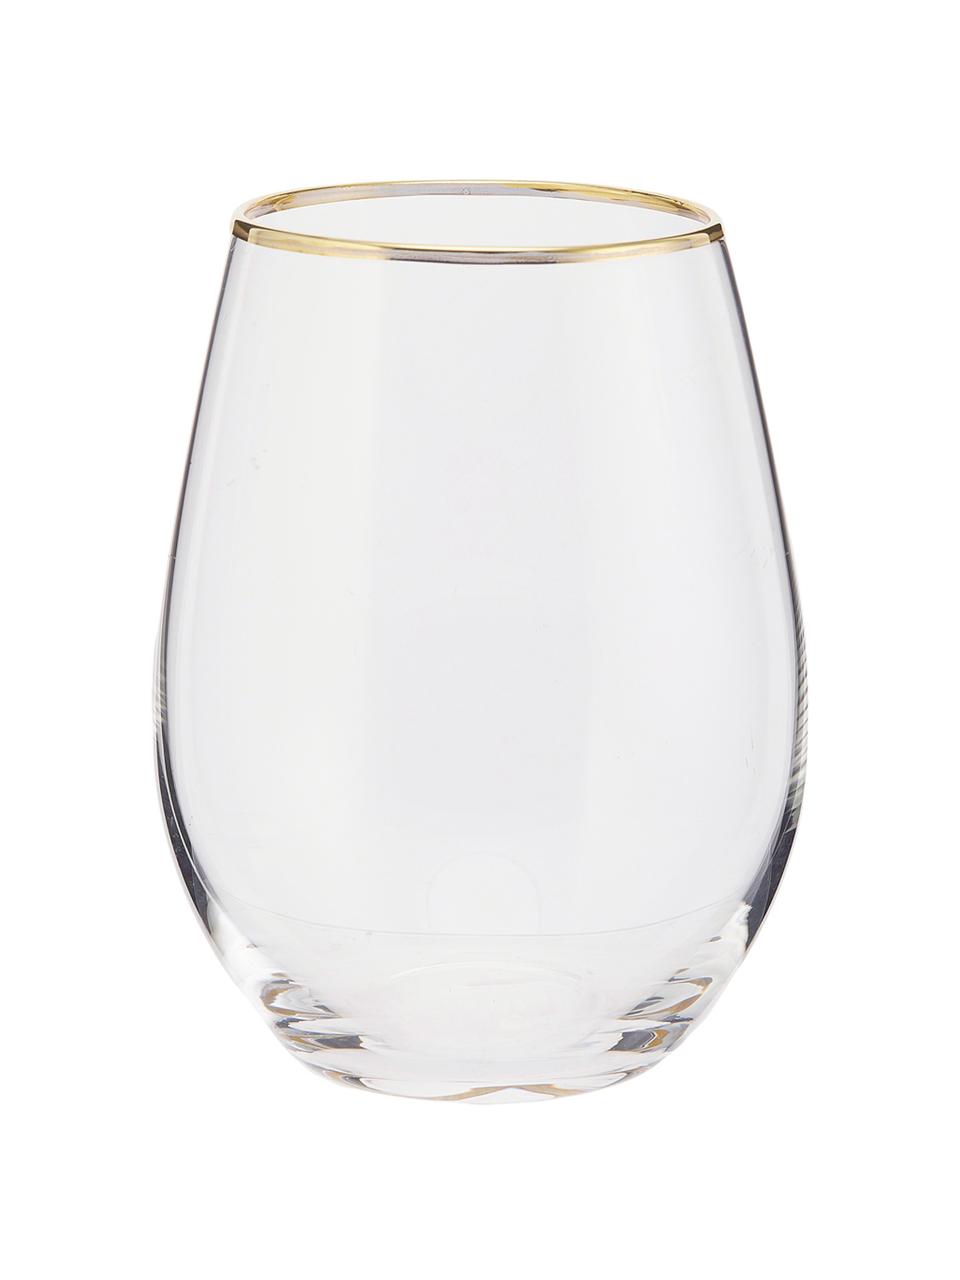 Waterglazen Chloe, 4 stuks, Glas, Transparant, goudkleurig, Ø 9 x H 12 cm, 600 ml